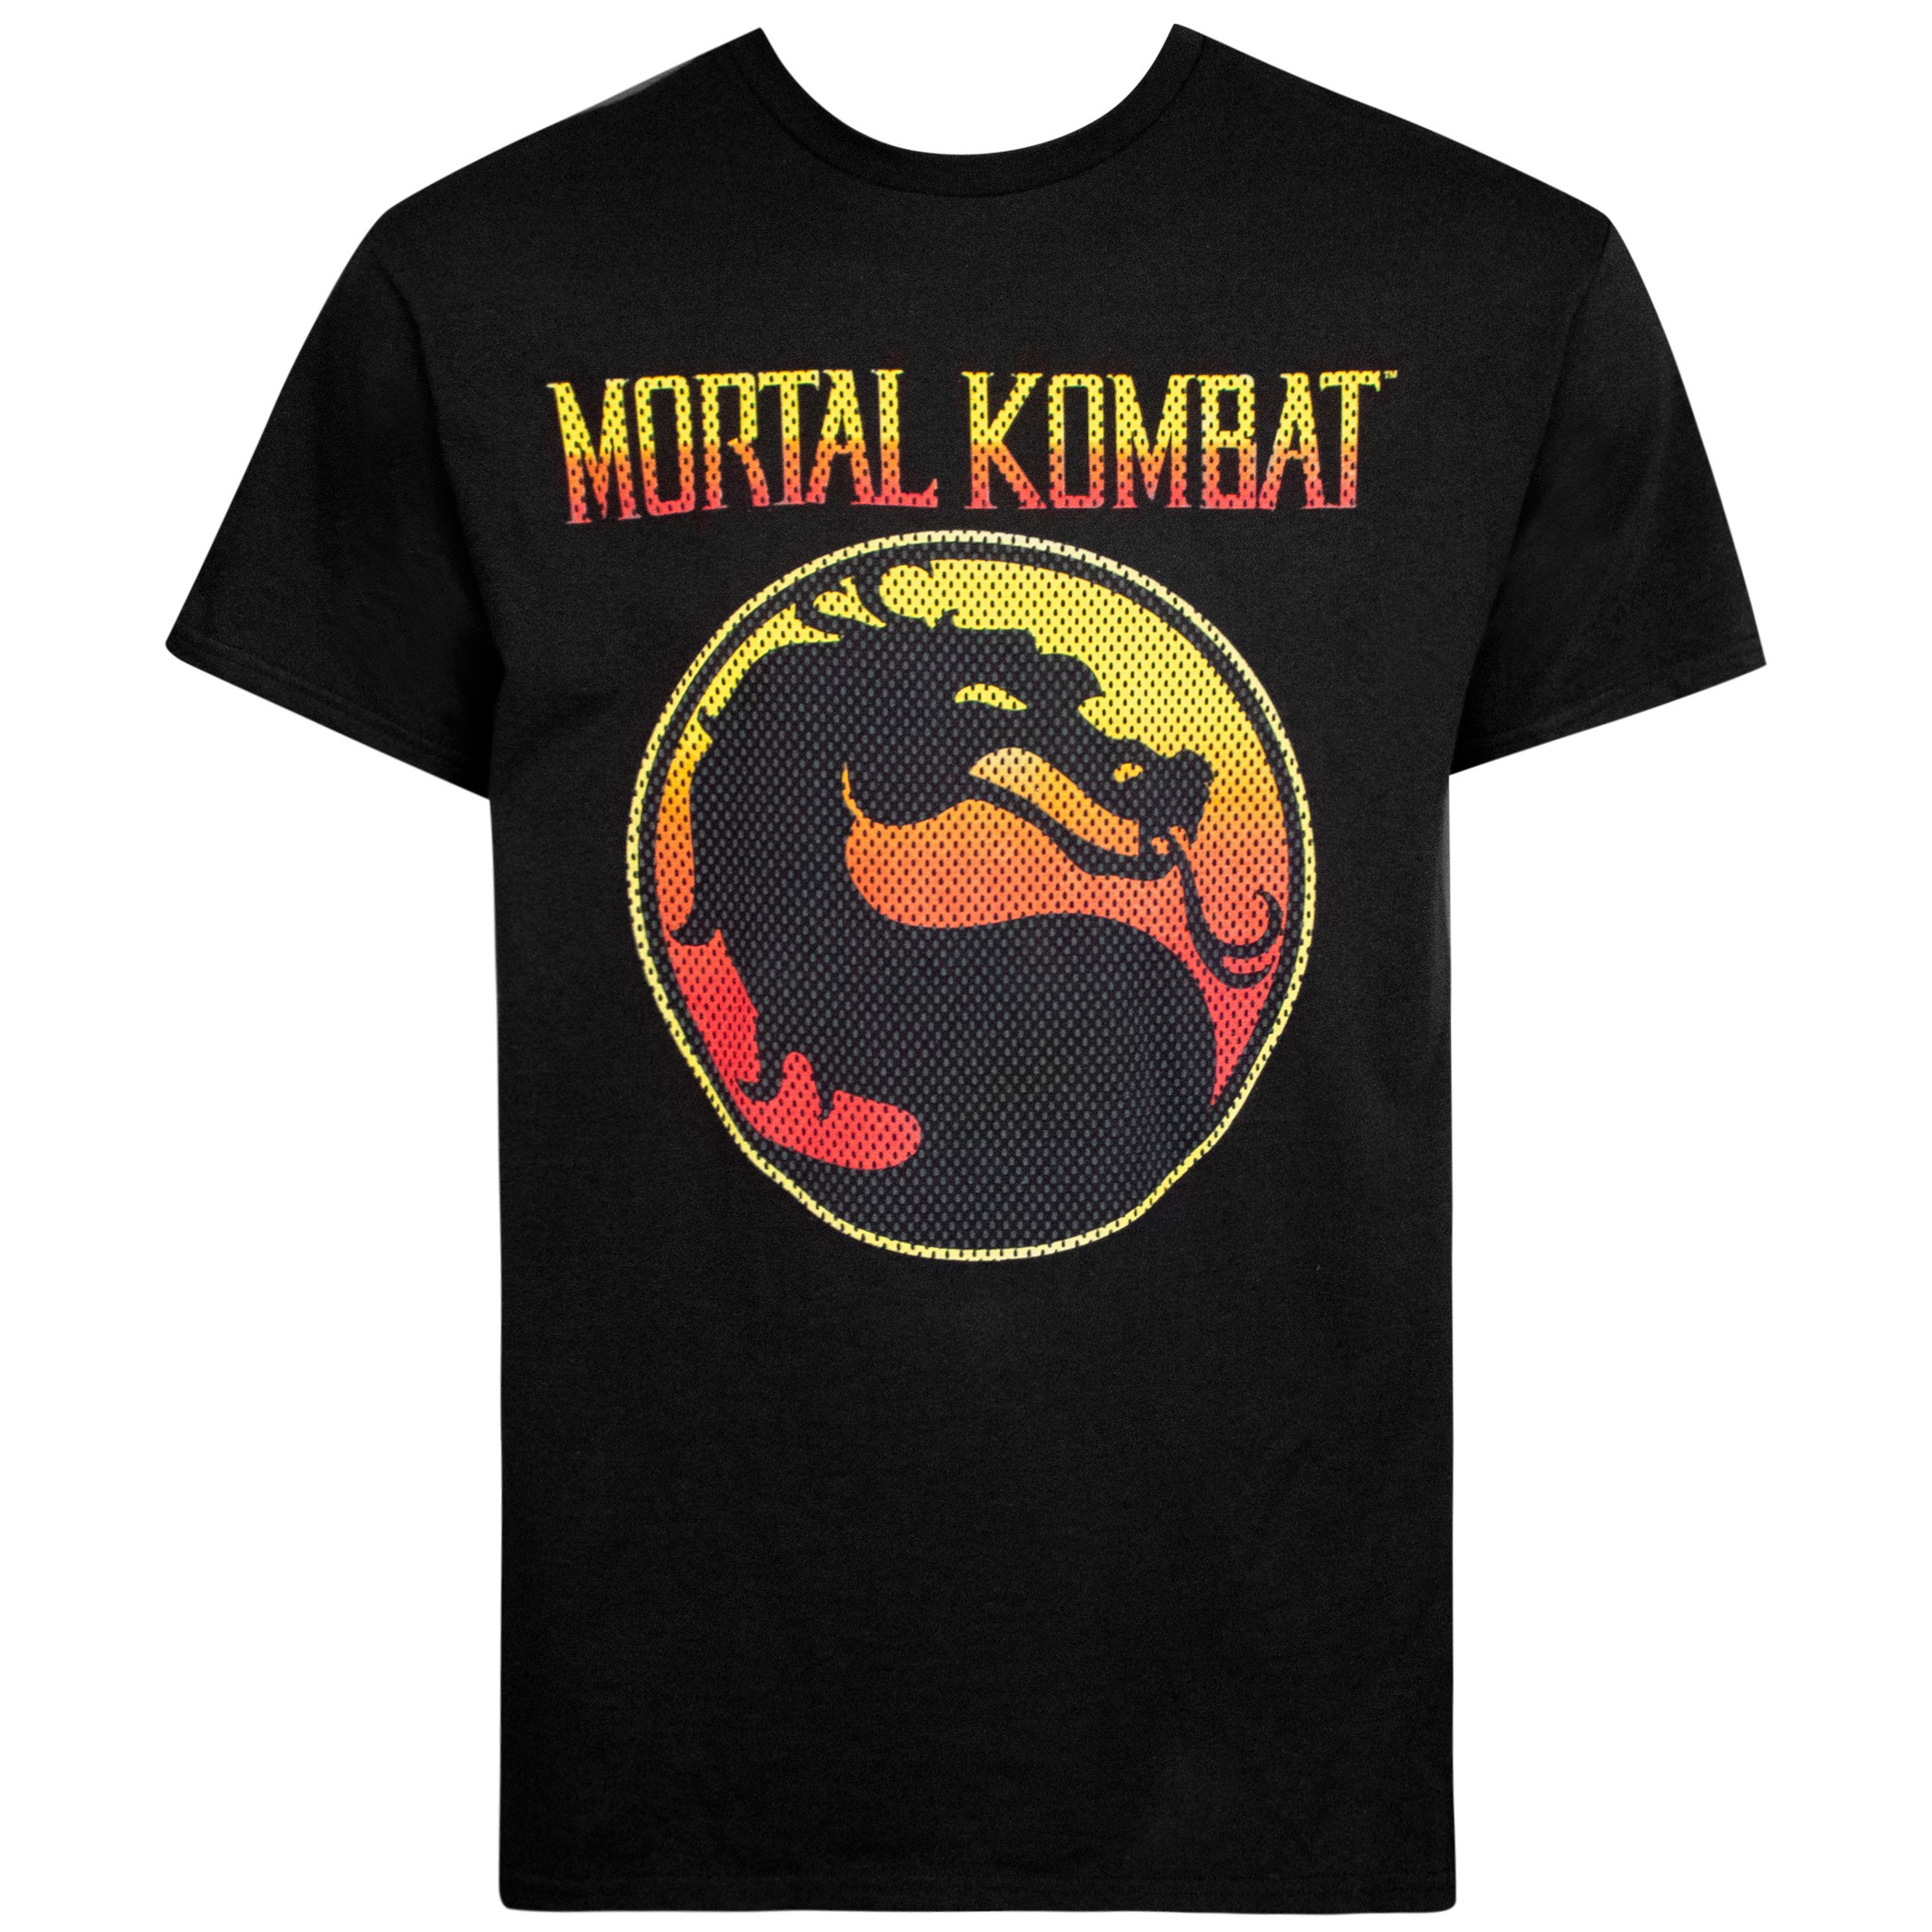 Mortal Kombat Classic Logo Black Tee Shirt